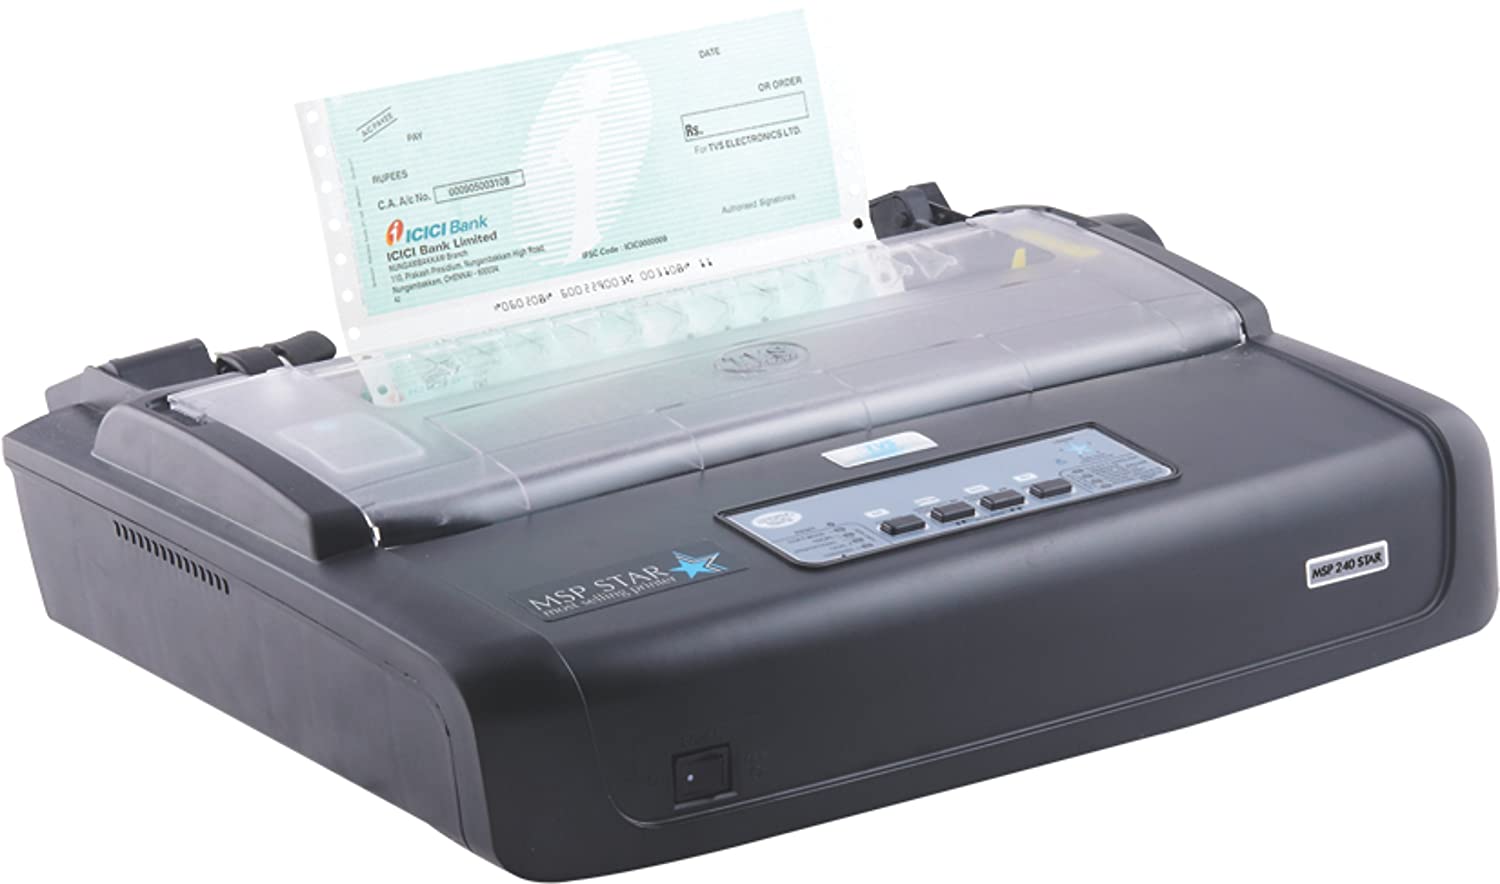 Tvs Printer-240 Monochrome Dot Matrix Printer-Printers, Copiers & Fax Machines-dealsplant